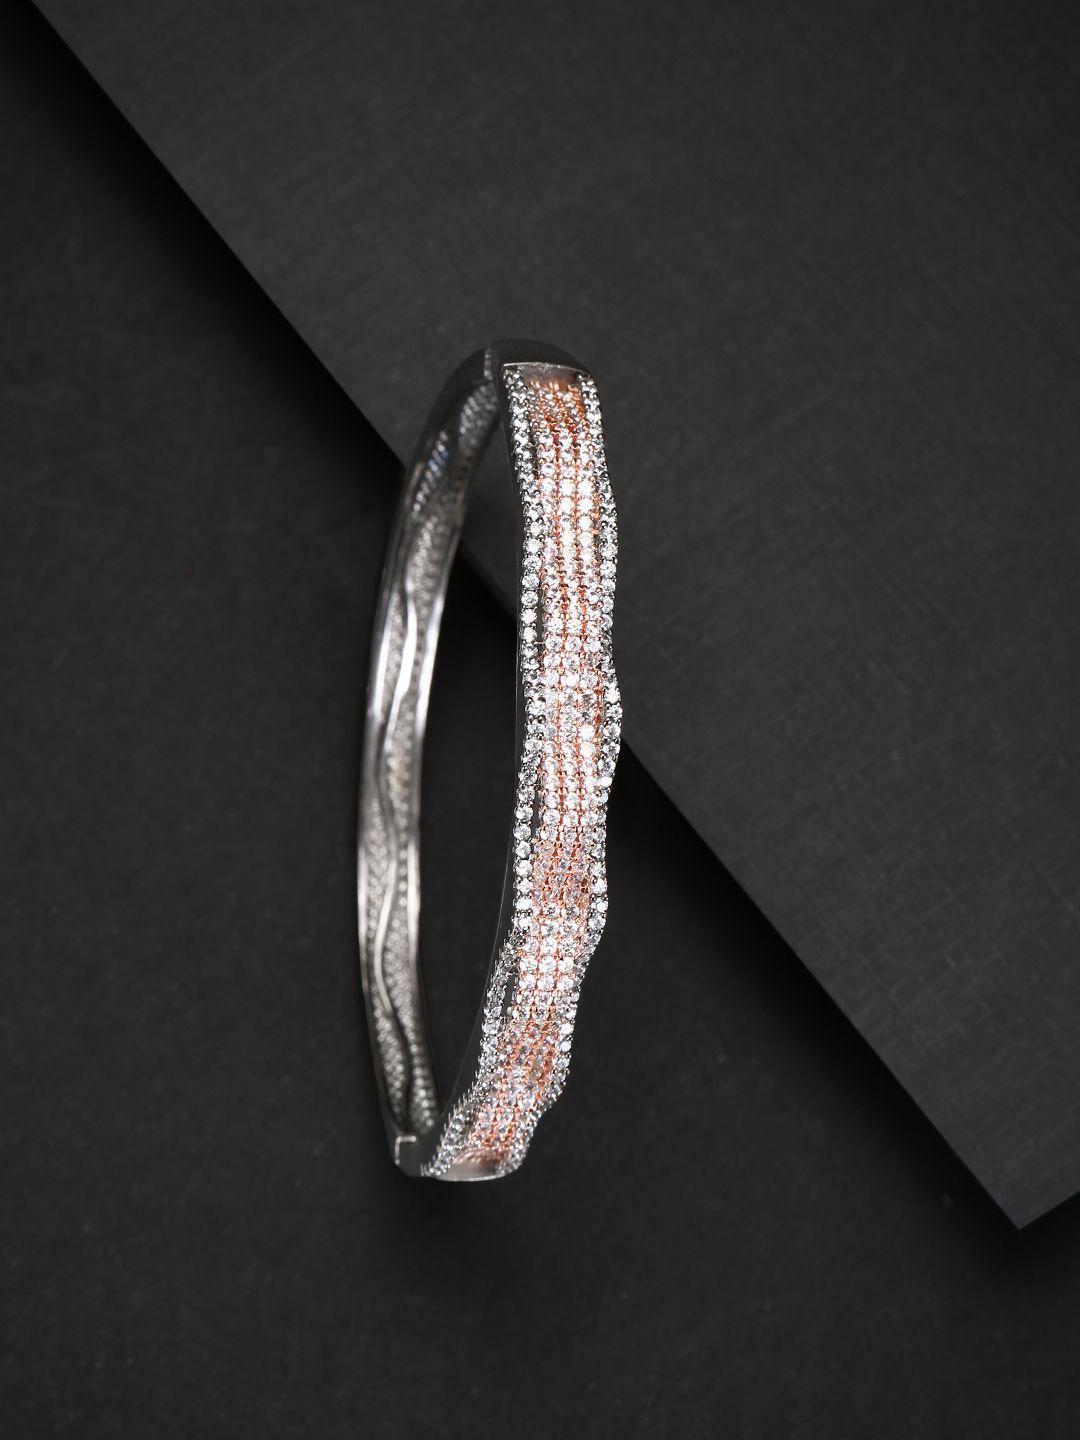 prita gunmetal-toned & rose gold-toned silver-plated ad-studded bangle style bracelet